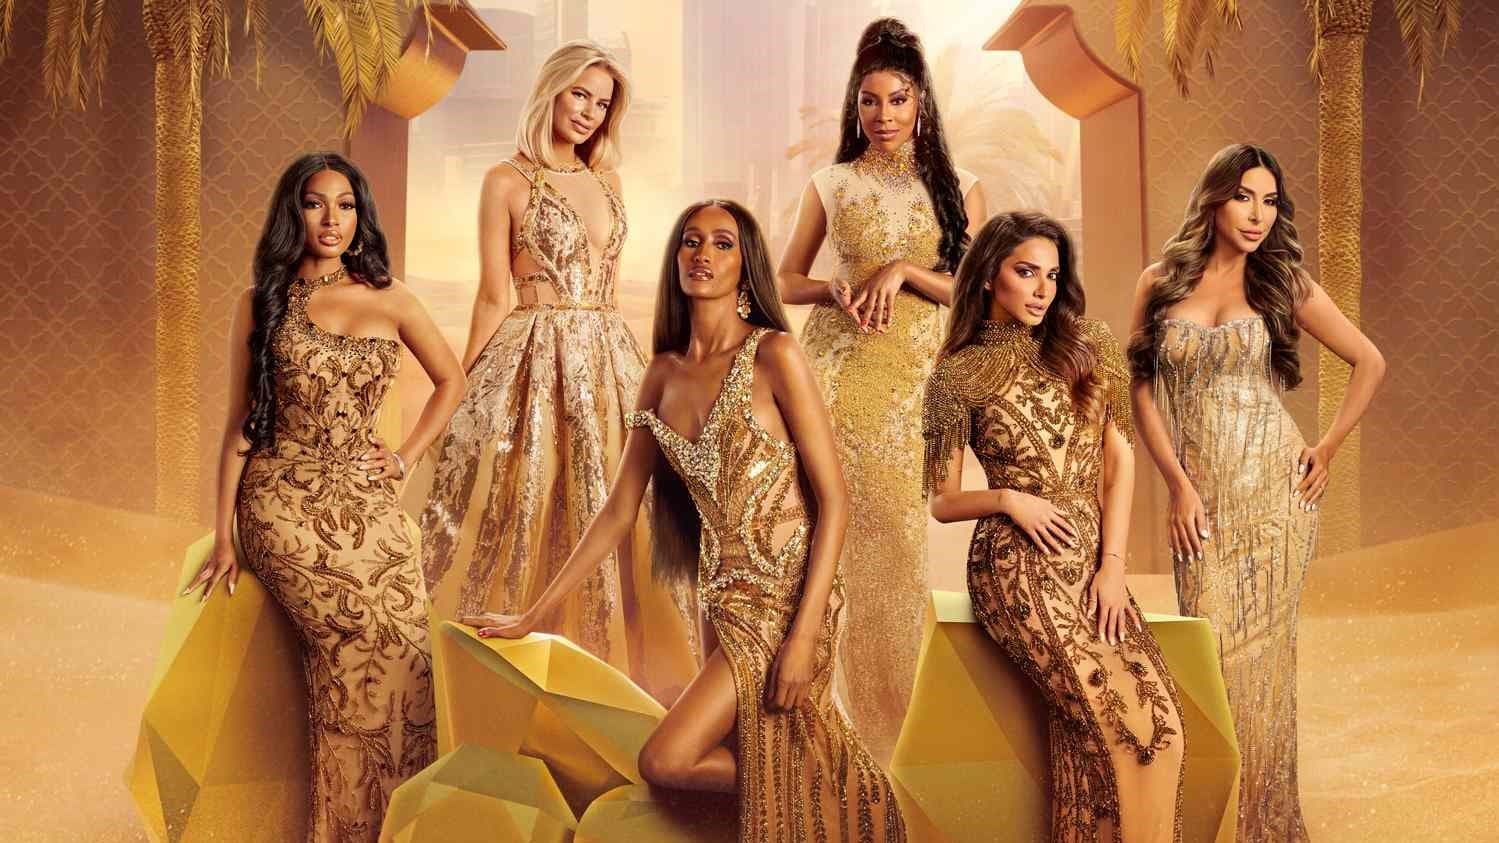 The Real Housewives of Dubai season 2